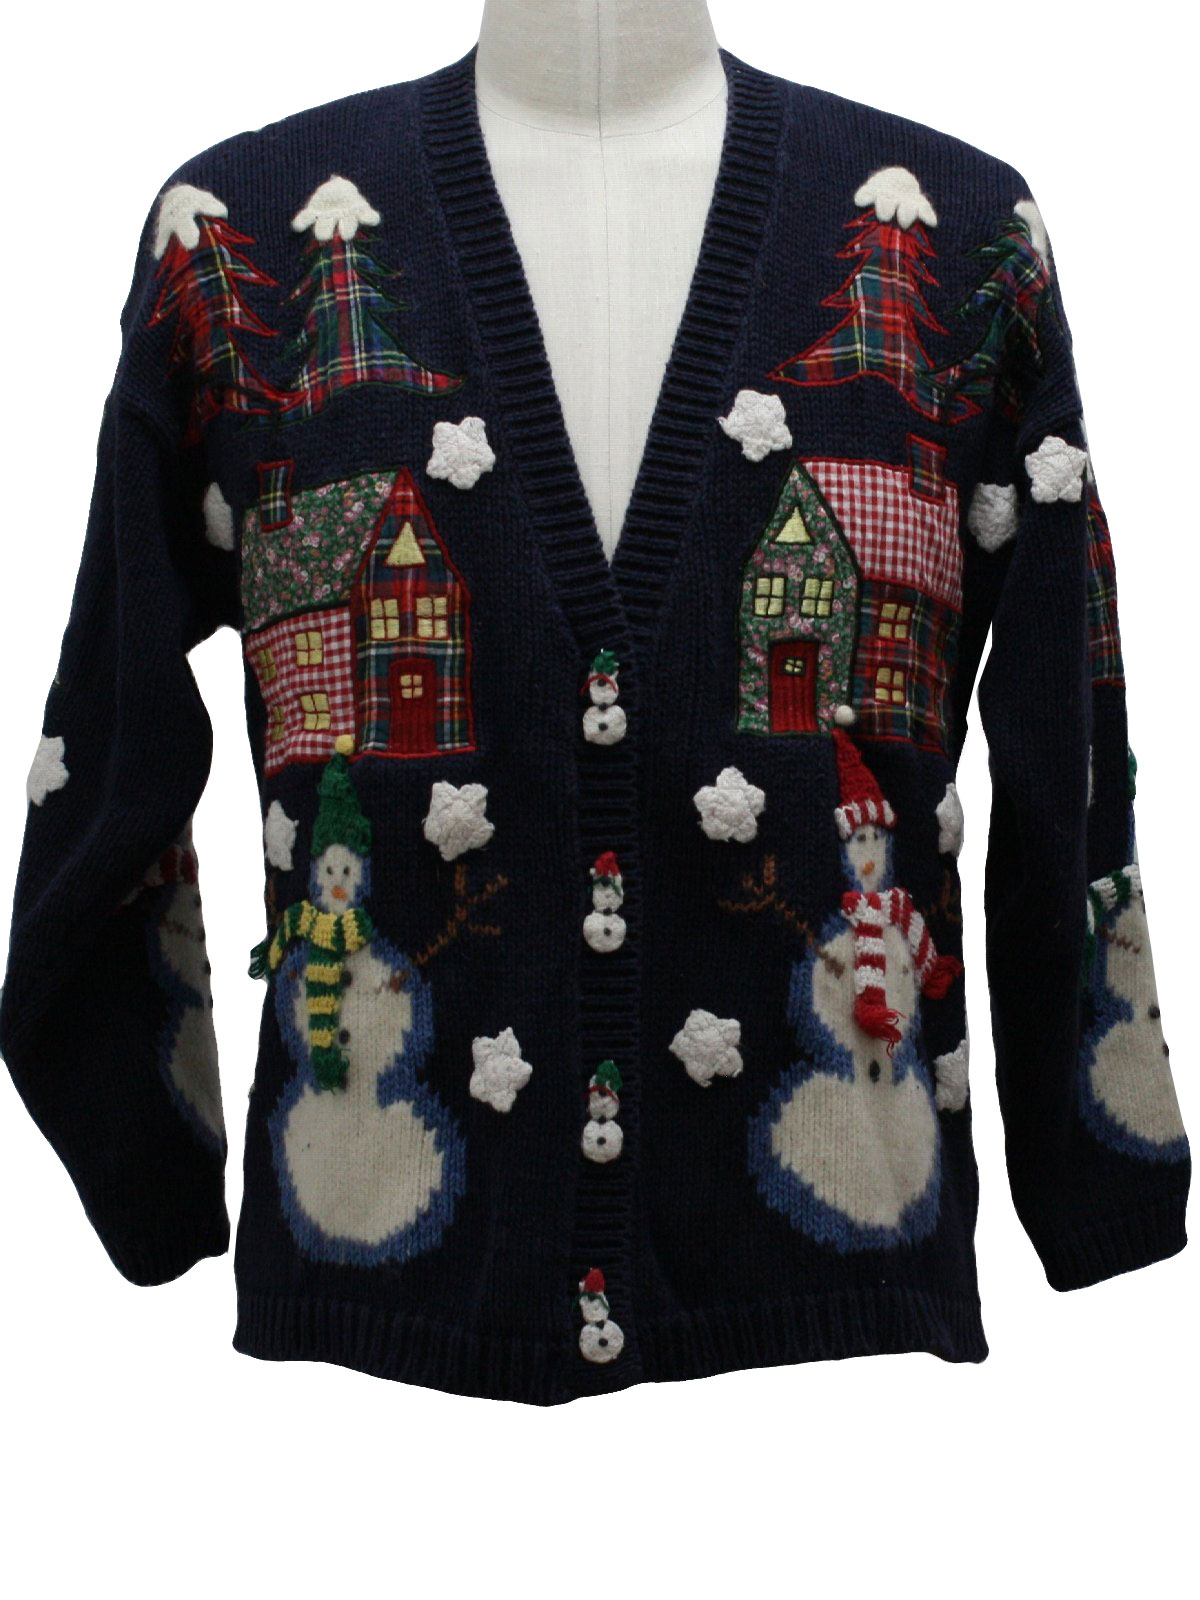 Ugly Christmas Cardigan Sweater: -PBJ Sport- Unisex midnight blue